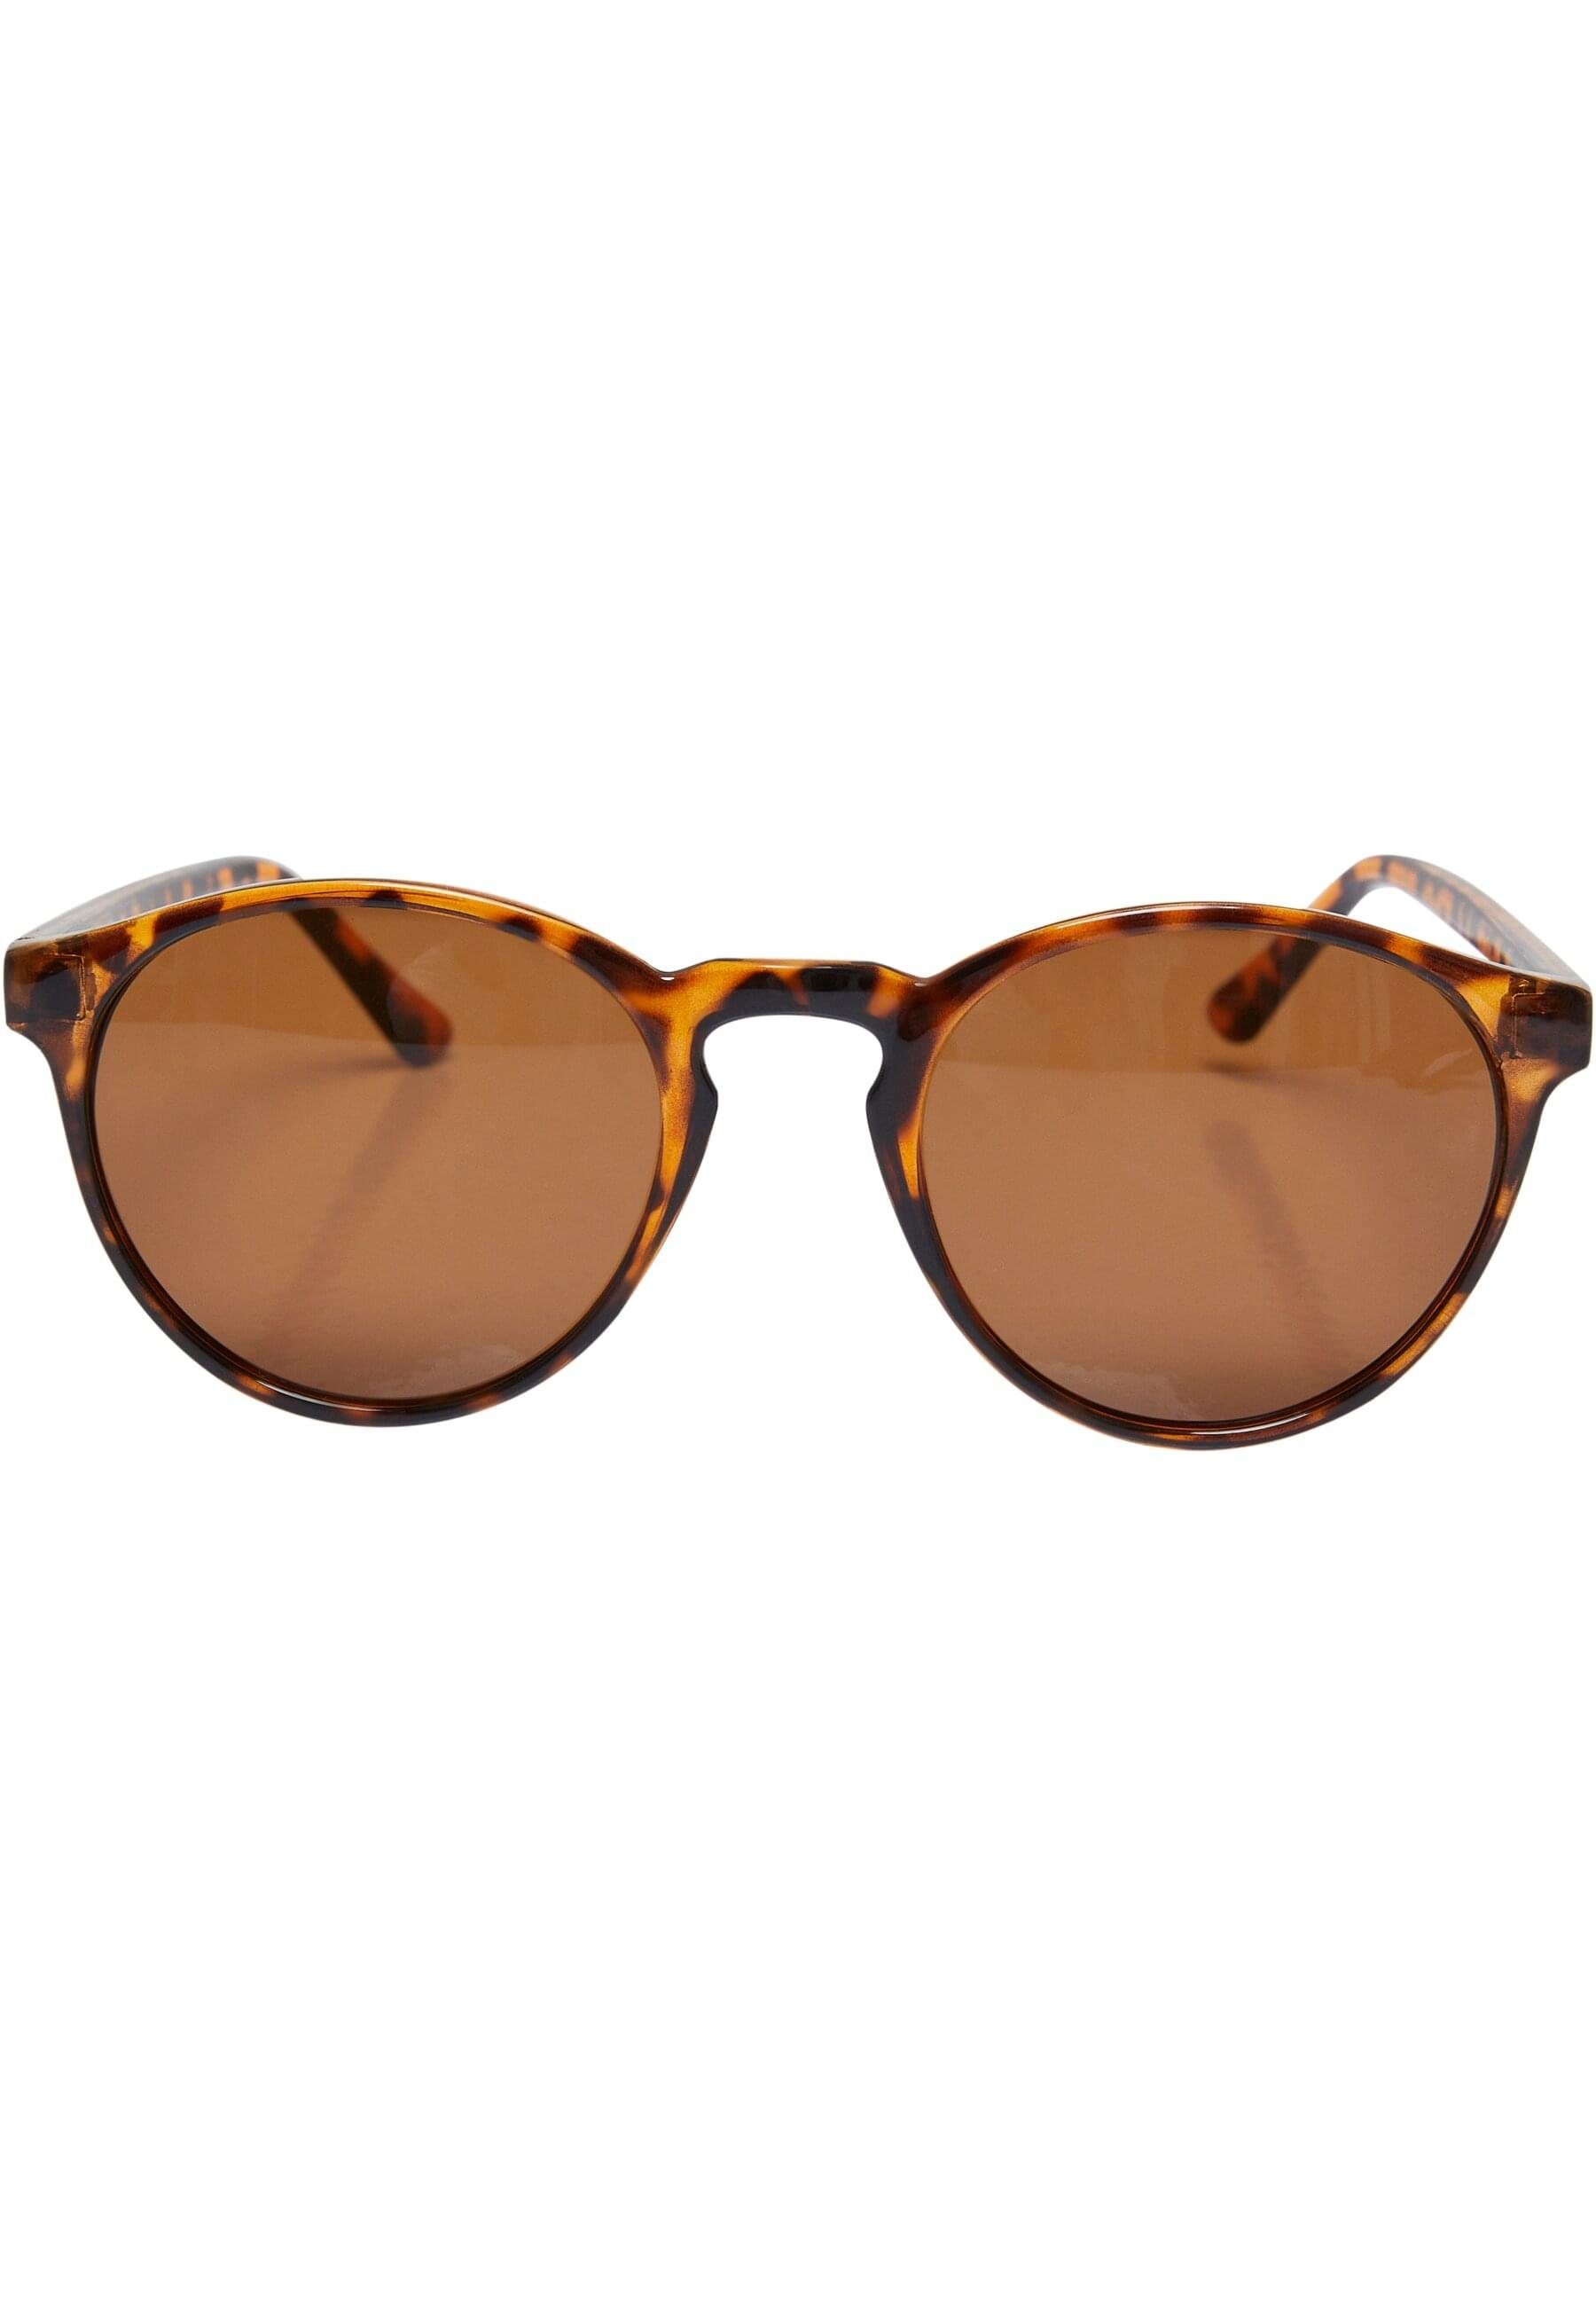 CLASSICS 3-Pack black/watergreen/amber Sunglasses Unisex Sonnenbrille Cypress URBAN